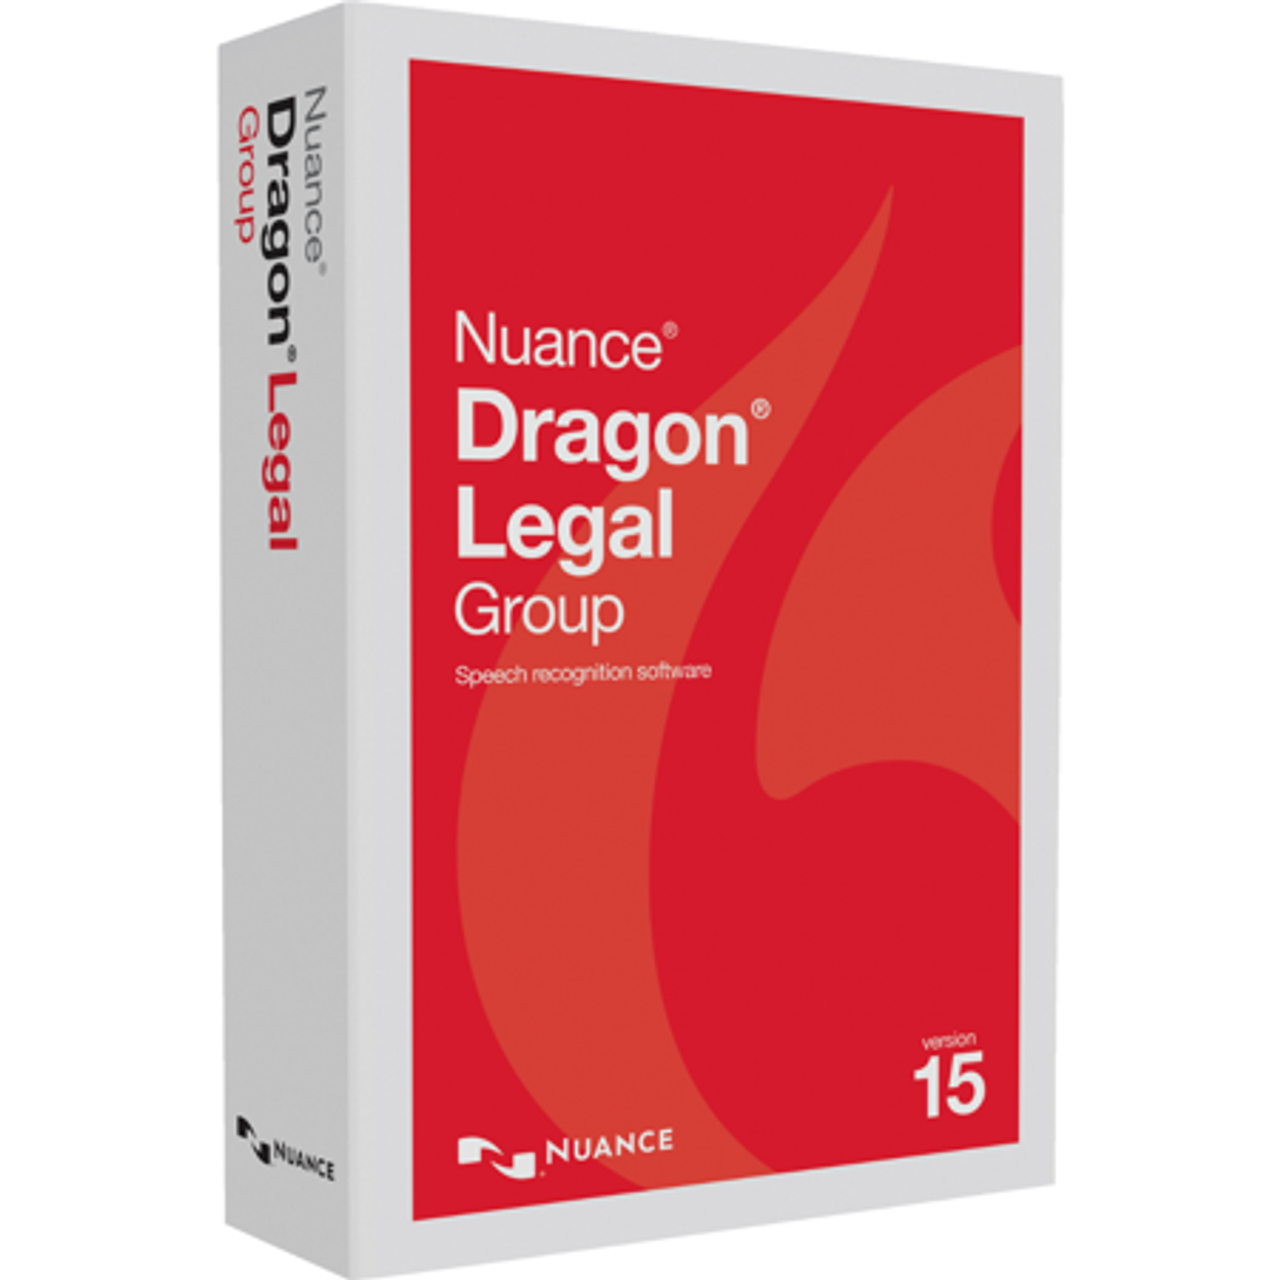 Nuance® Dragon® Legal Group Version 15.0